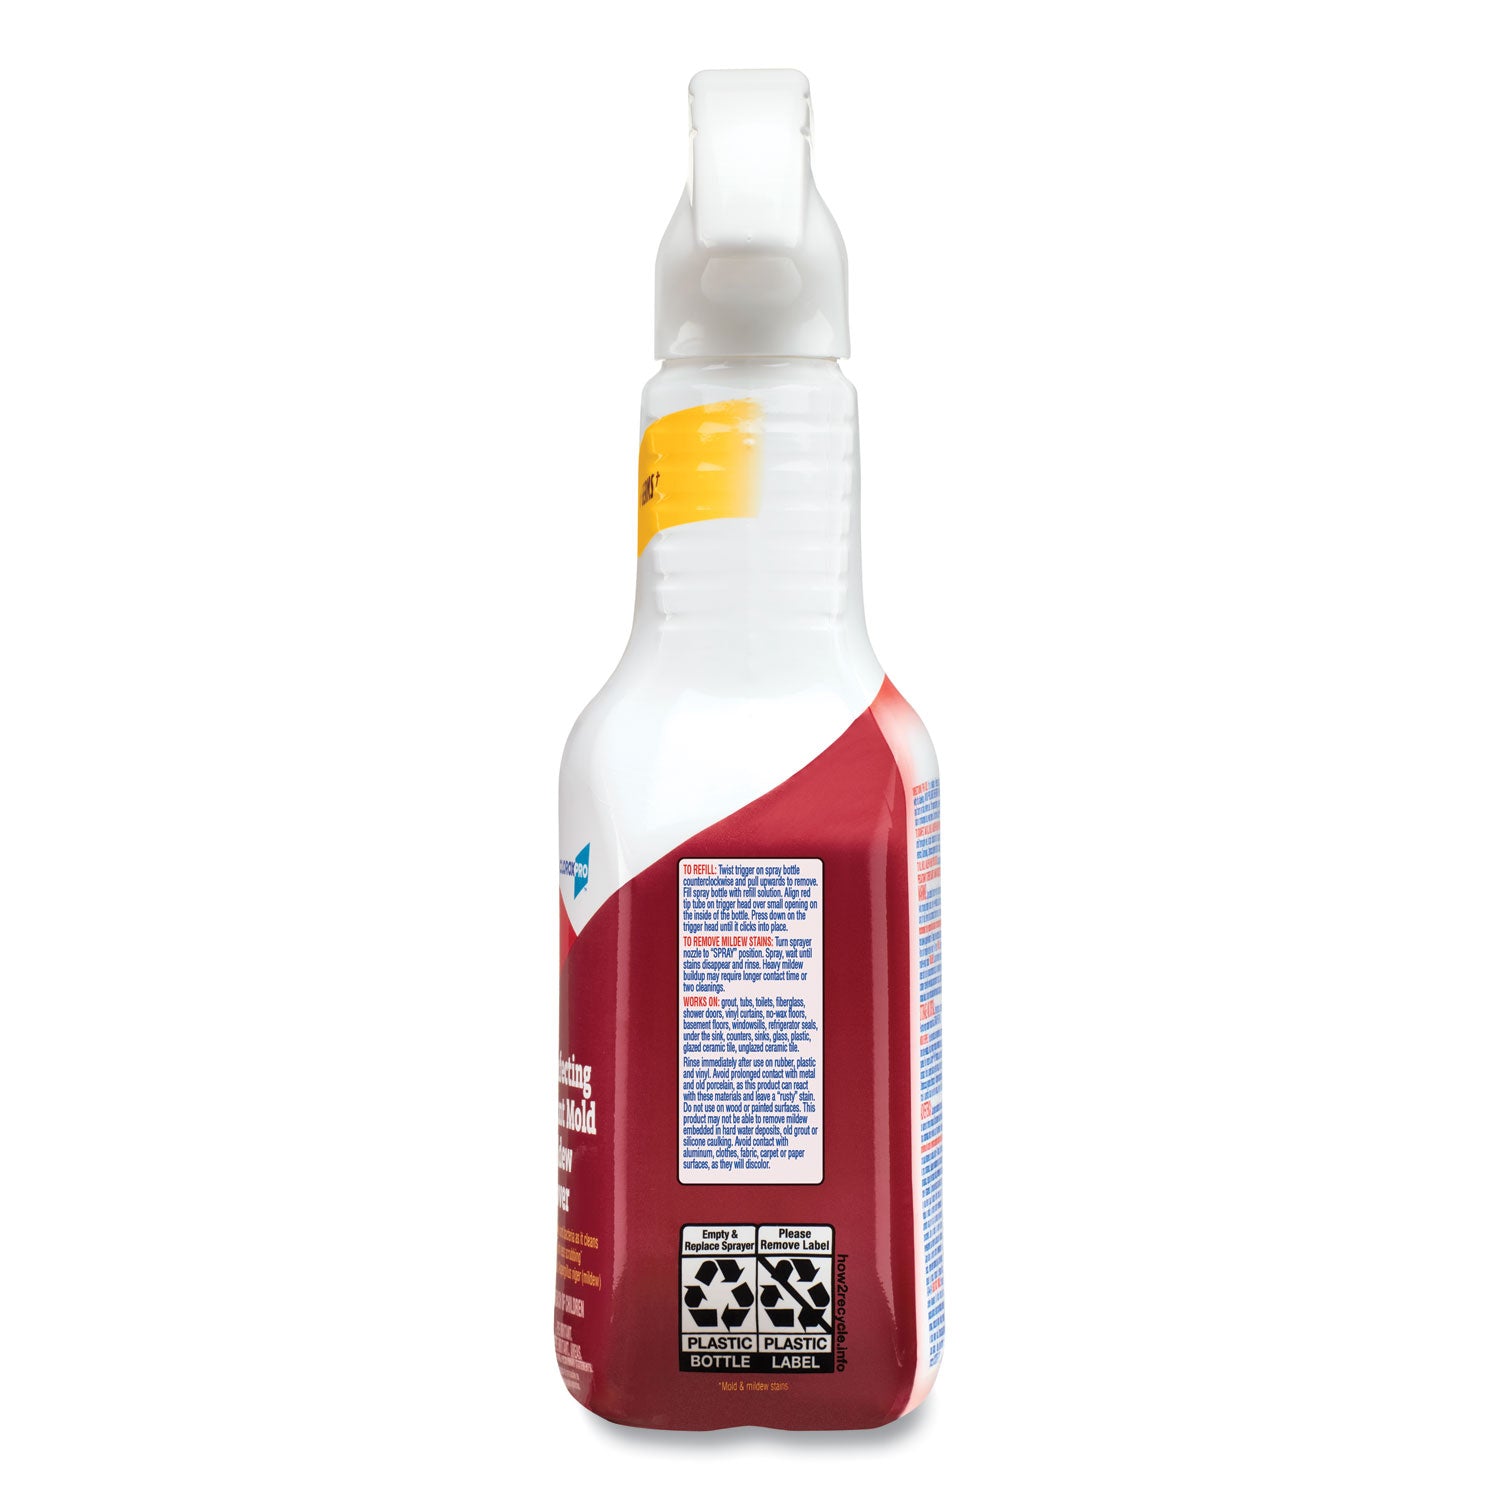 Disinfects Instant Mildew Remover, 32 oz Smart Tube Spray, 9/Carton - 